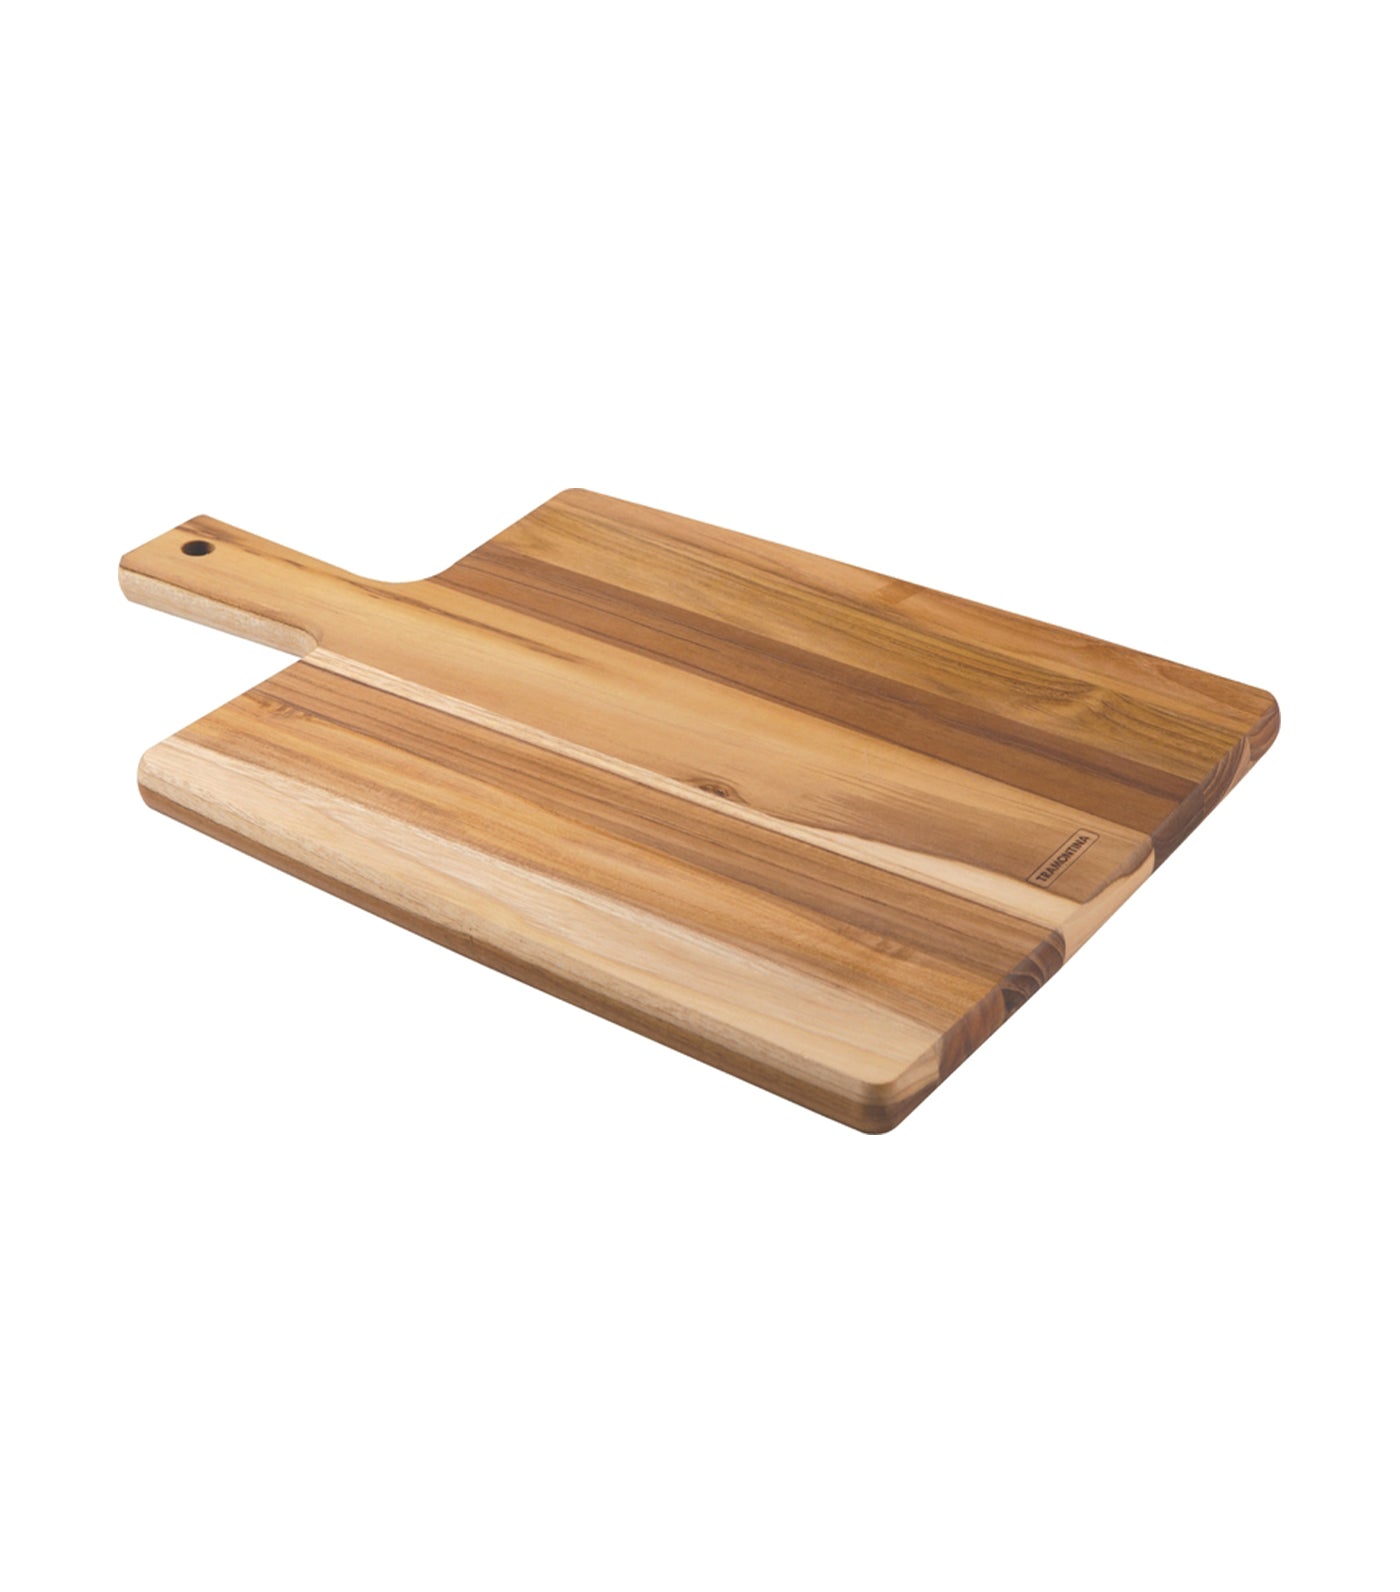 Teakwood Cutting Board with Handle